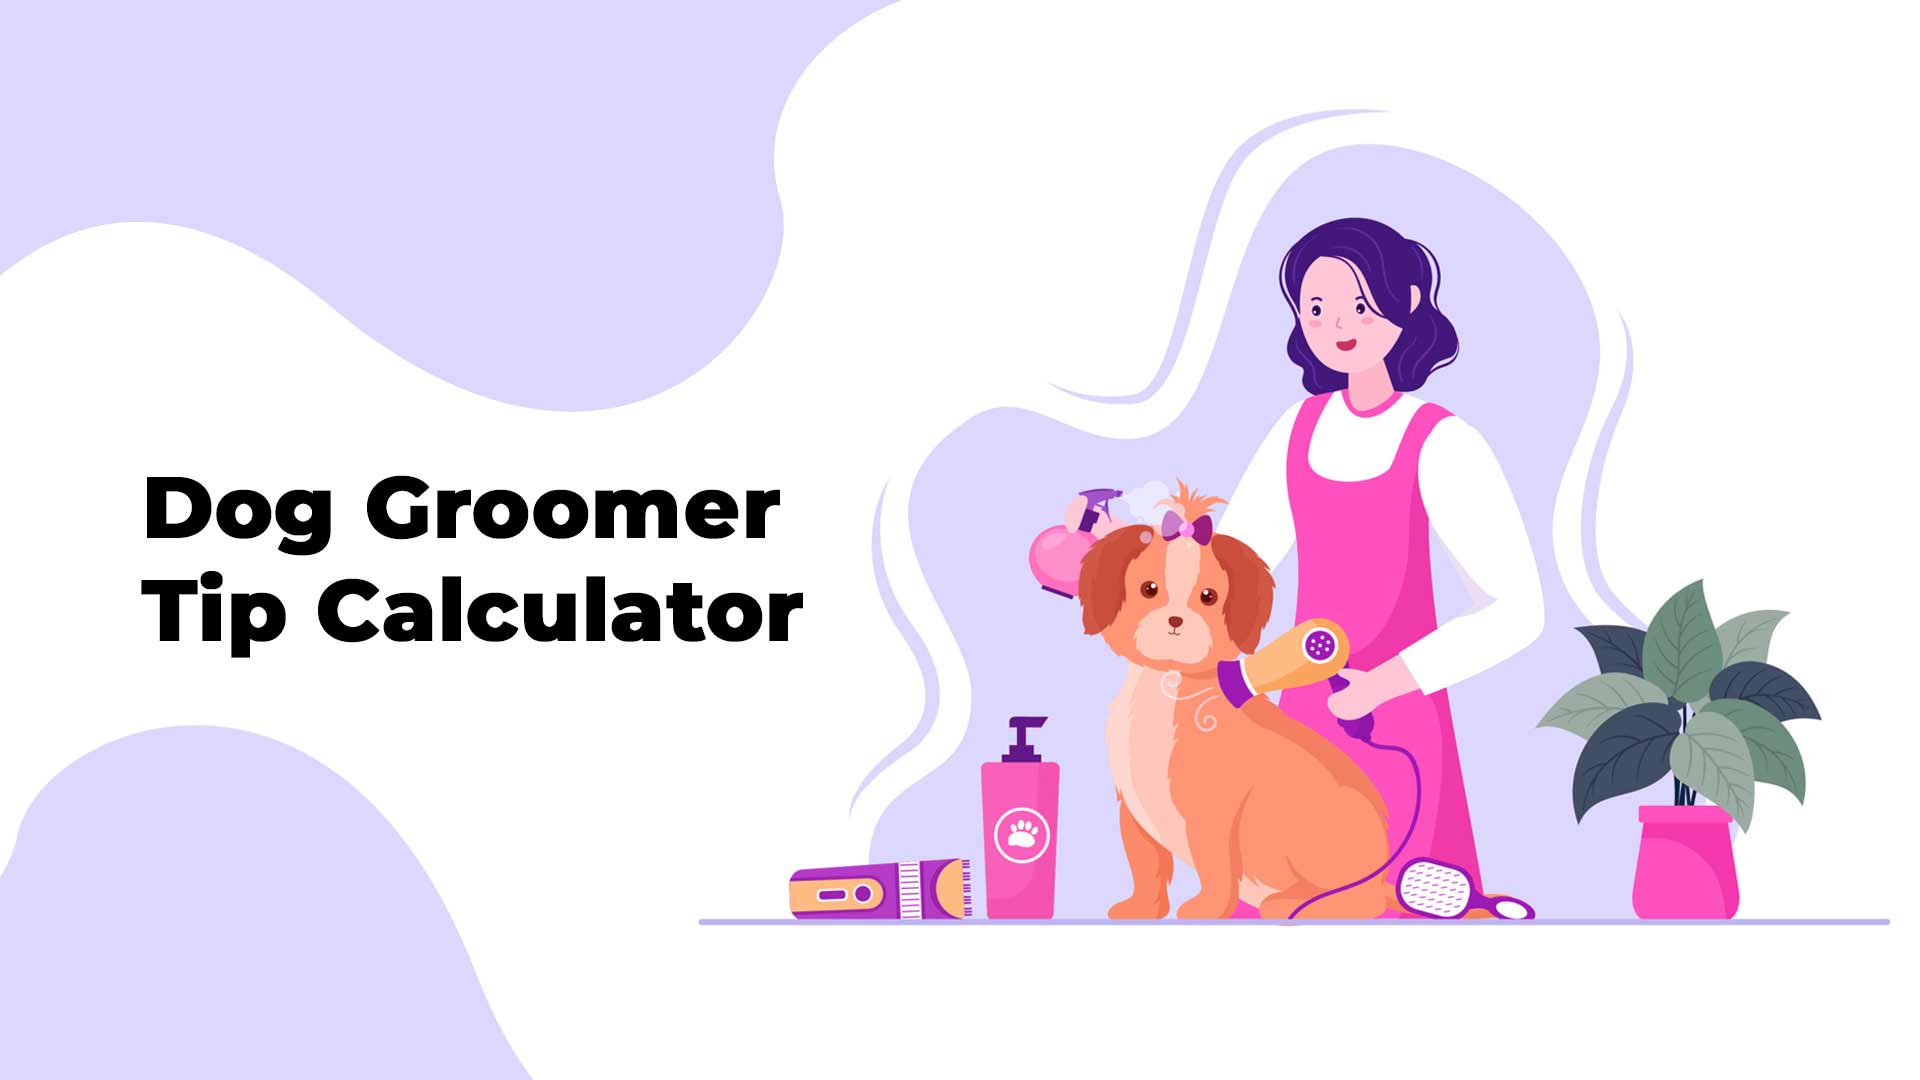 Dog Groomer Tip Calculator